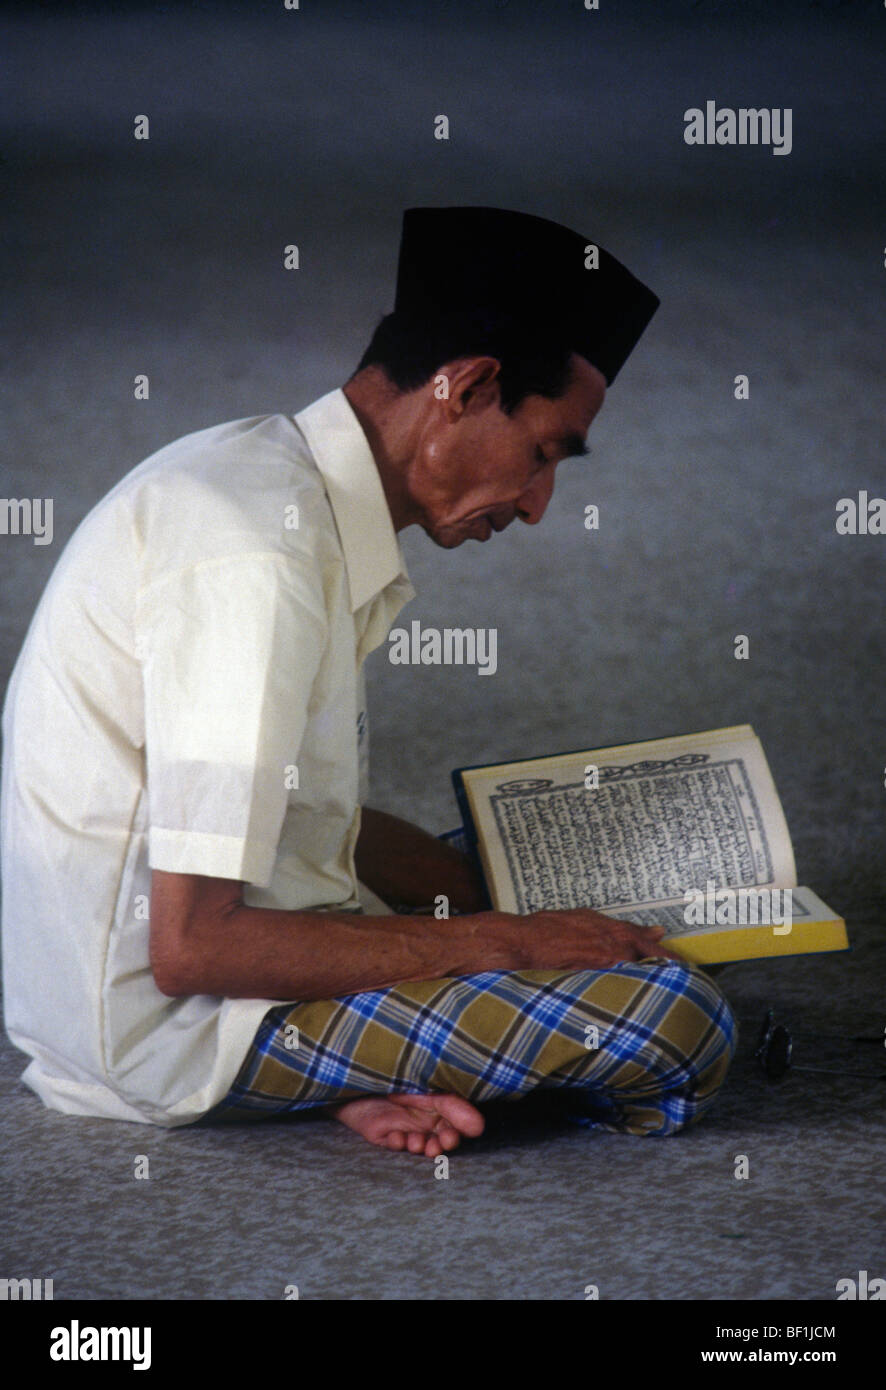 Muslim male reading the Koran Stock Photo